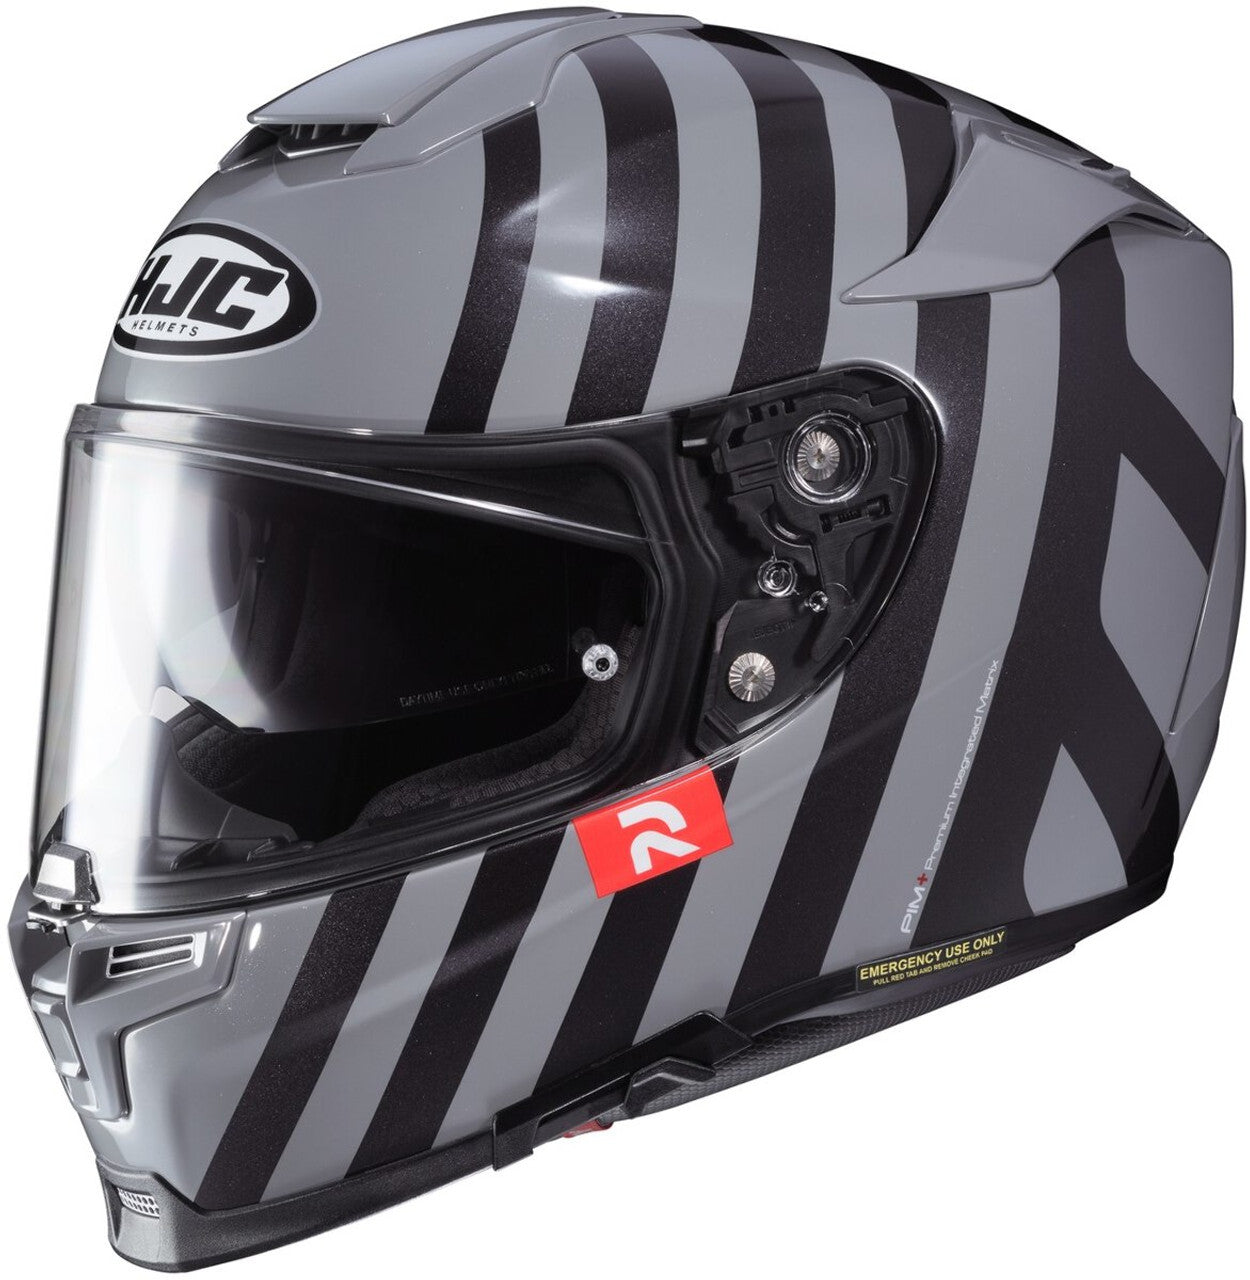 HJC RPHA 70 Forvic MC-5 Motorcycle Helmet - Grey/Black - 1 only!